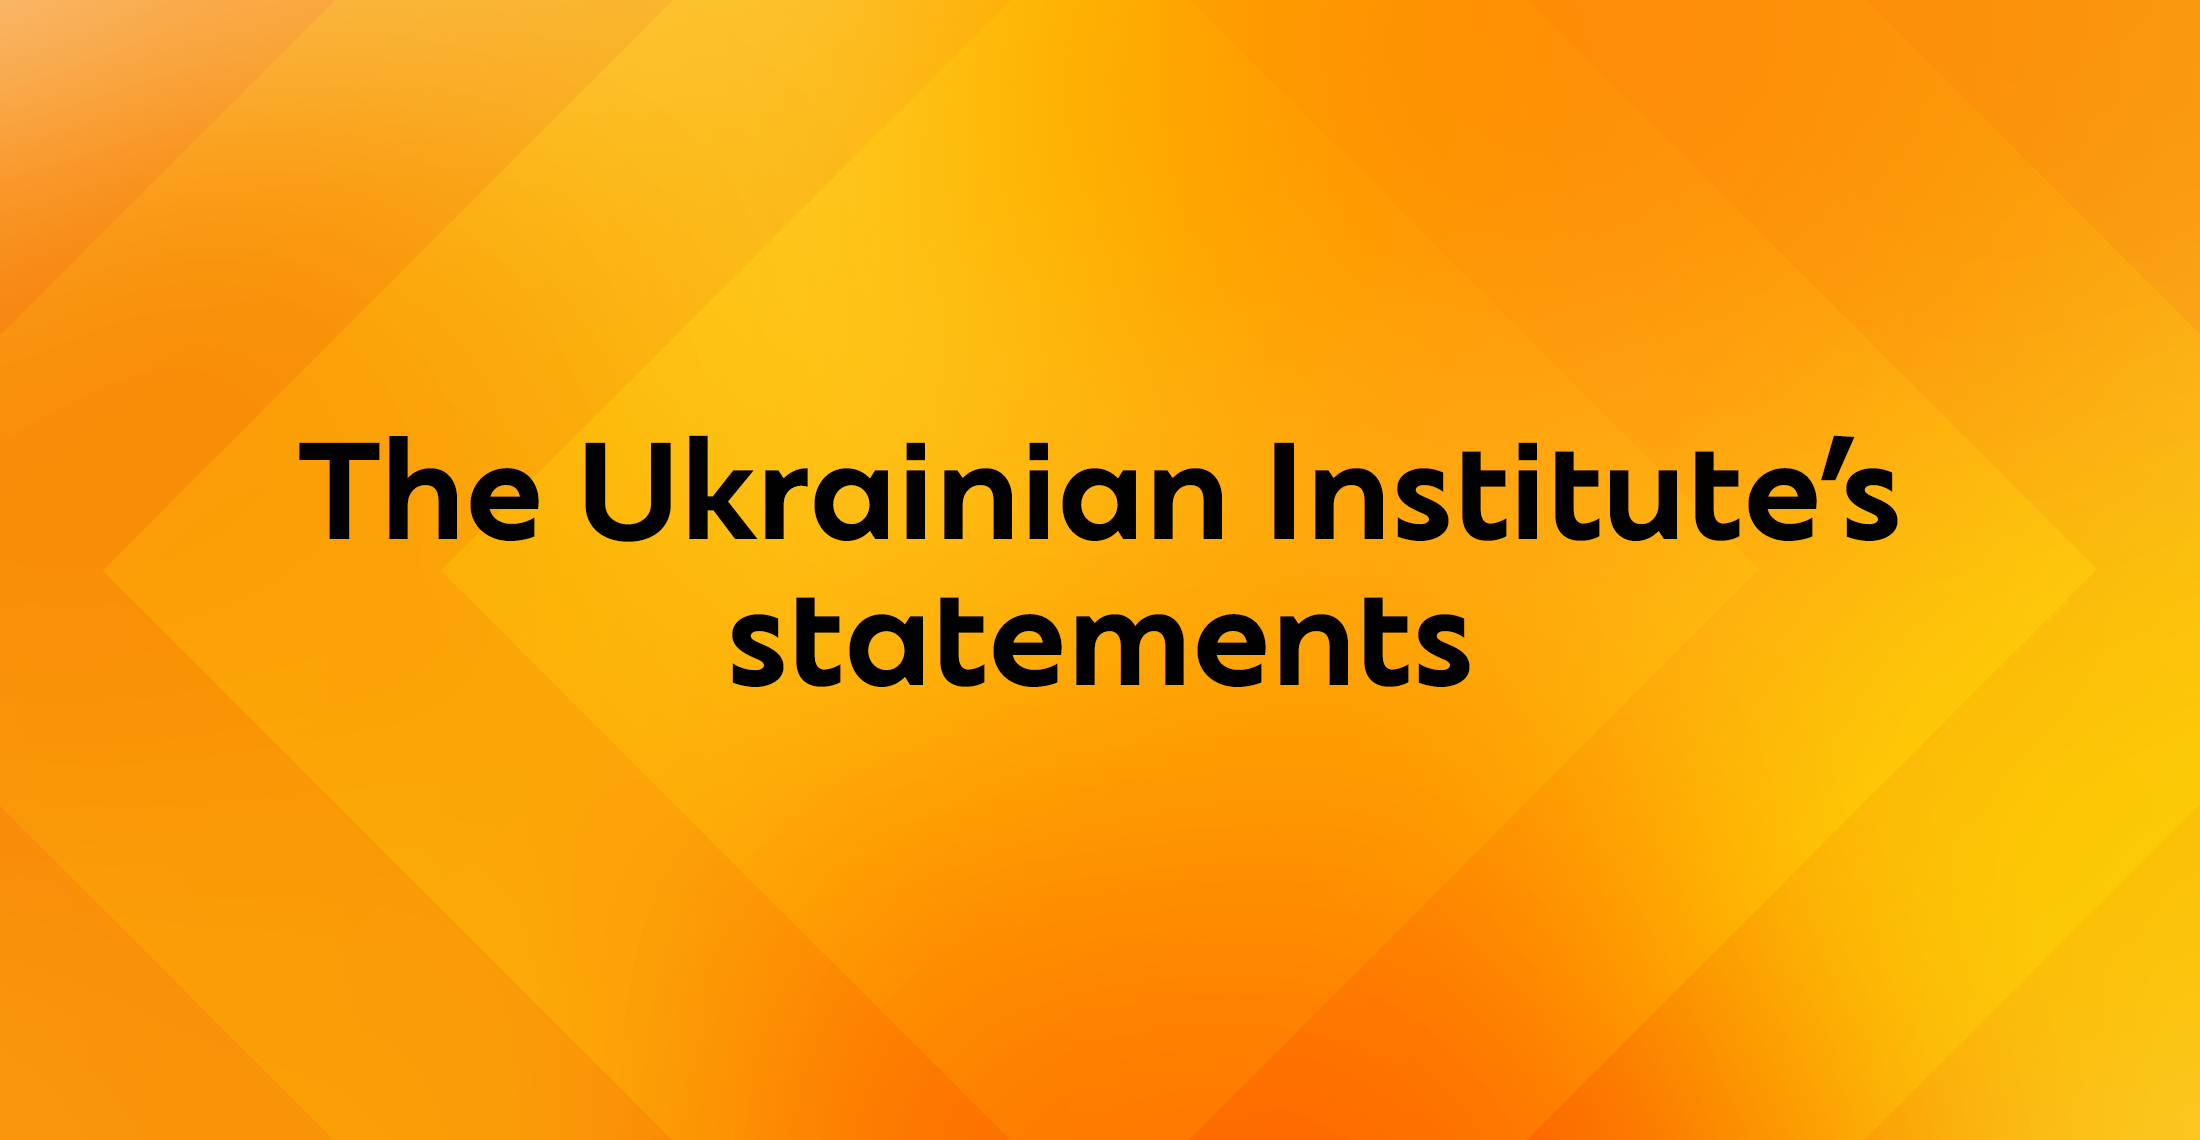 The Ukrainian Institute’s statements